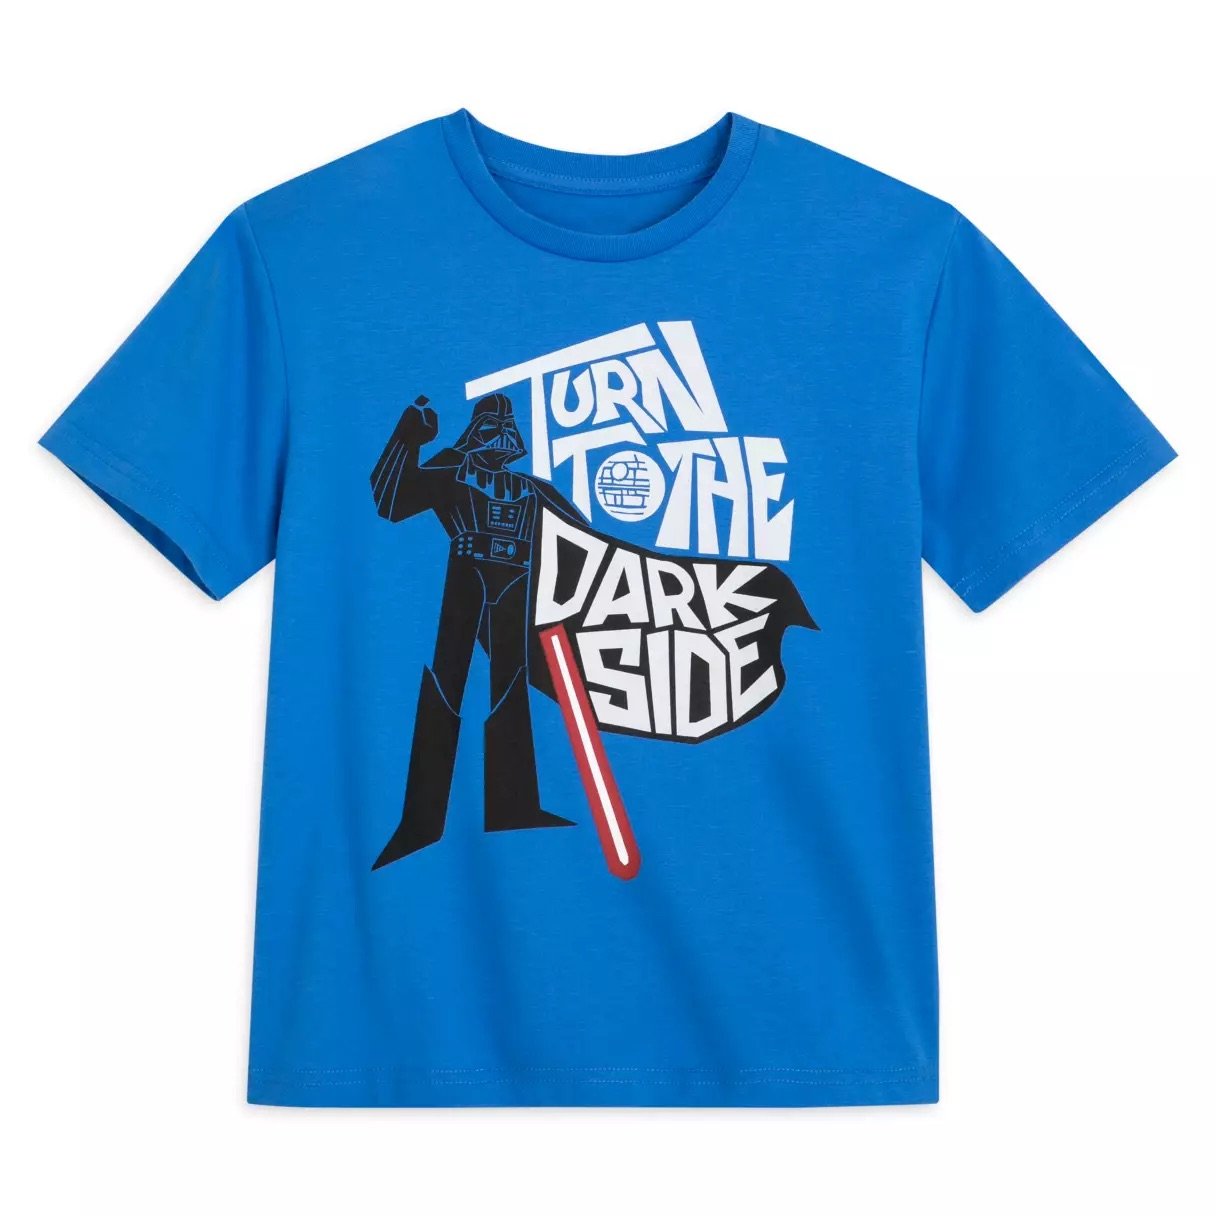 Kids "Turn to the Dark Side" T-Shirt